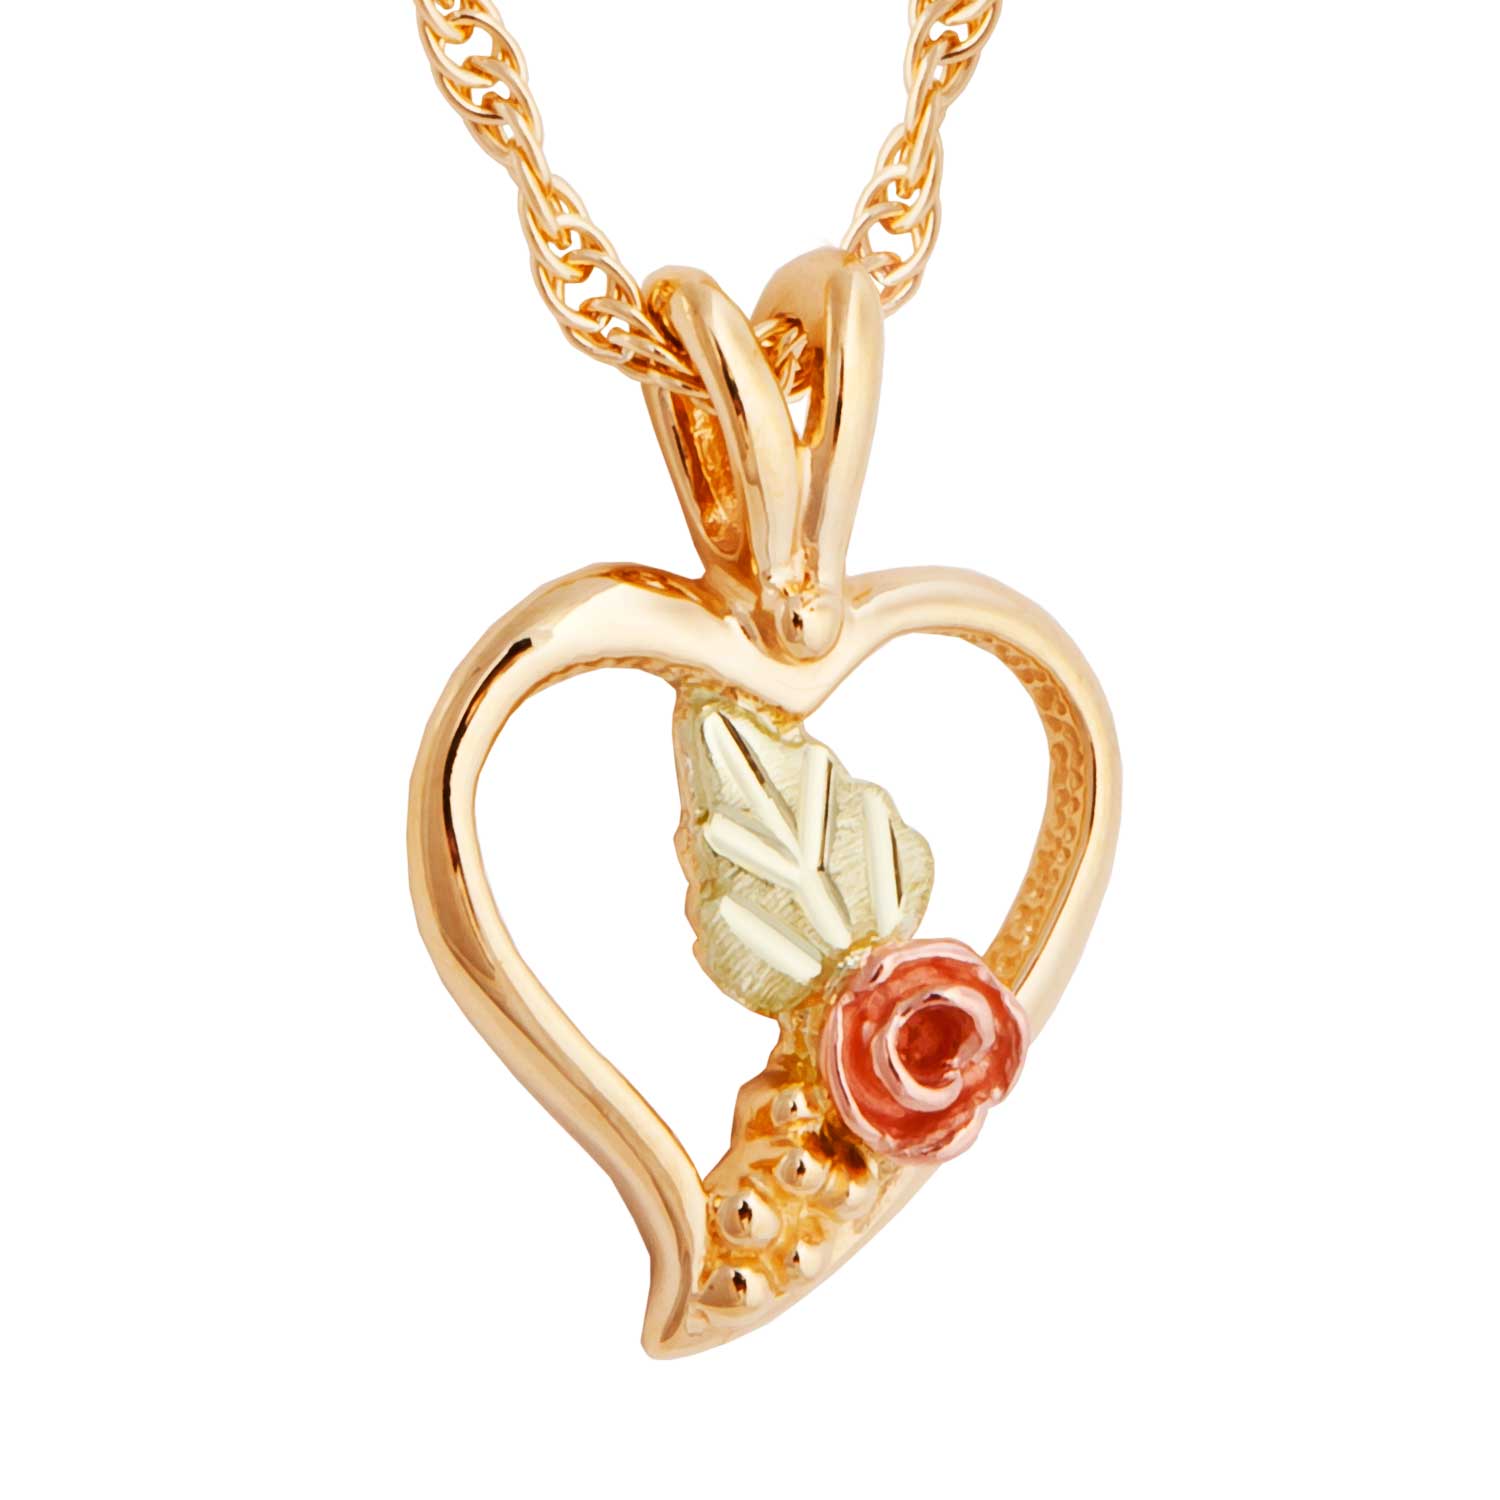 Black Hills Gold Necklace with Grape Cluster Rose motif pendent. 